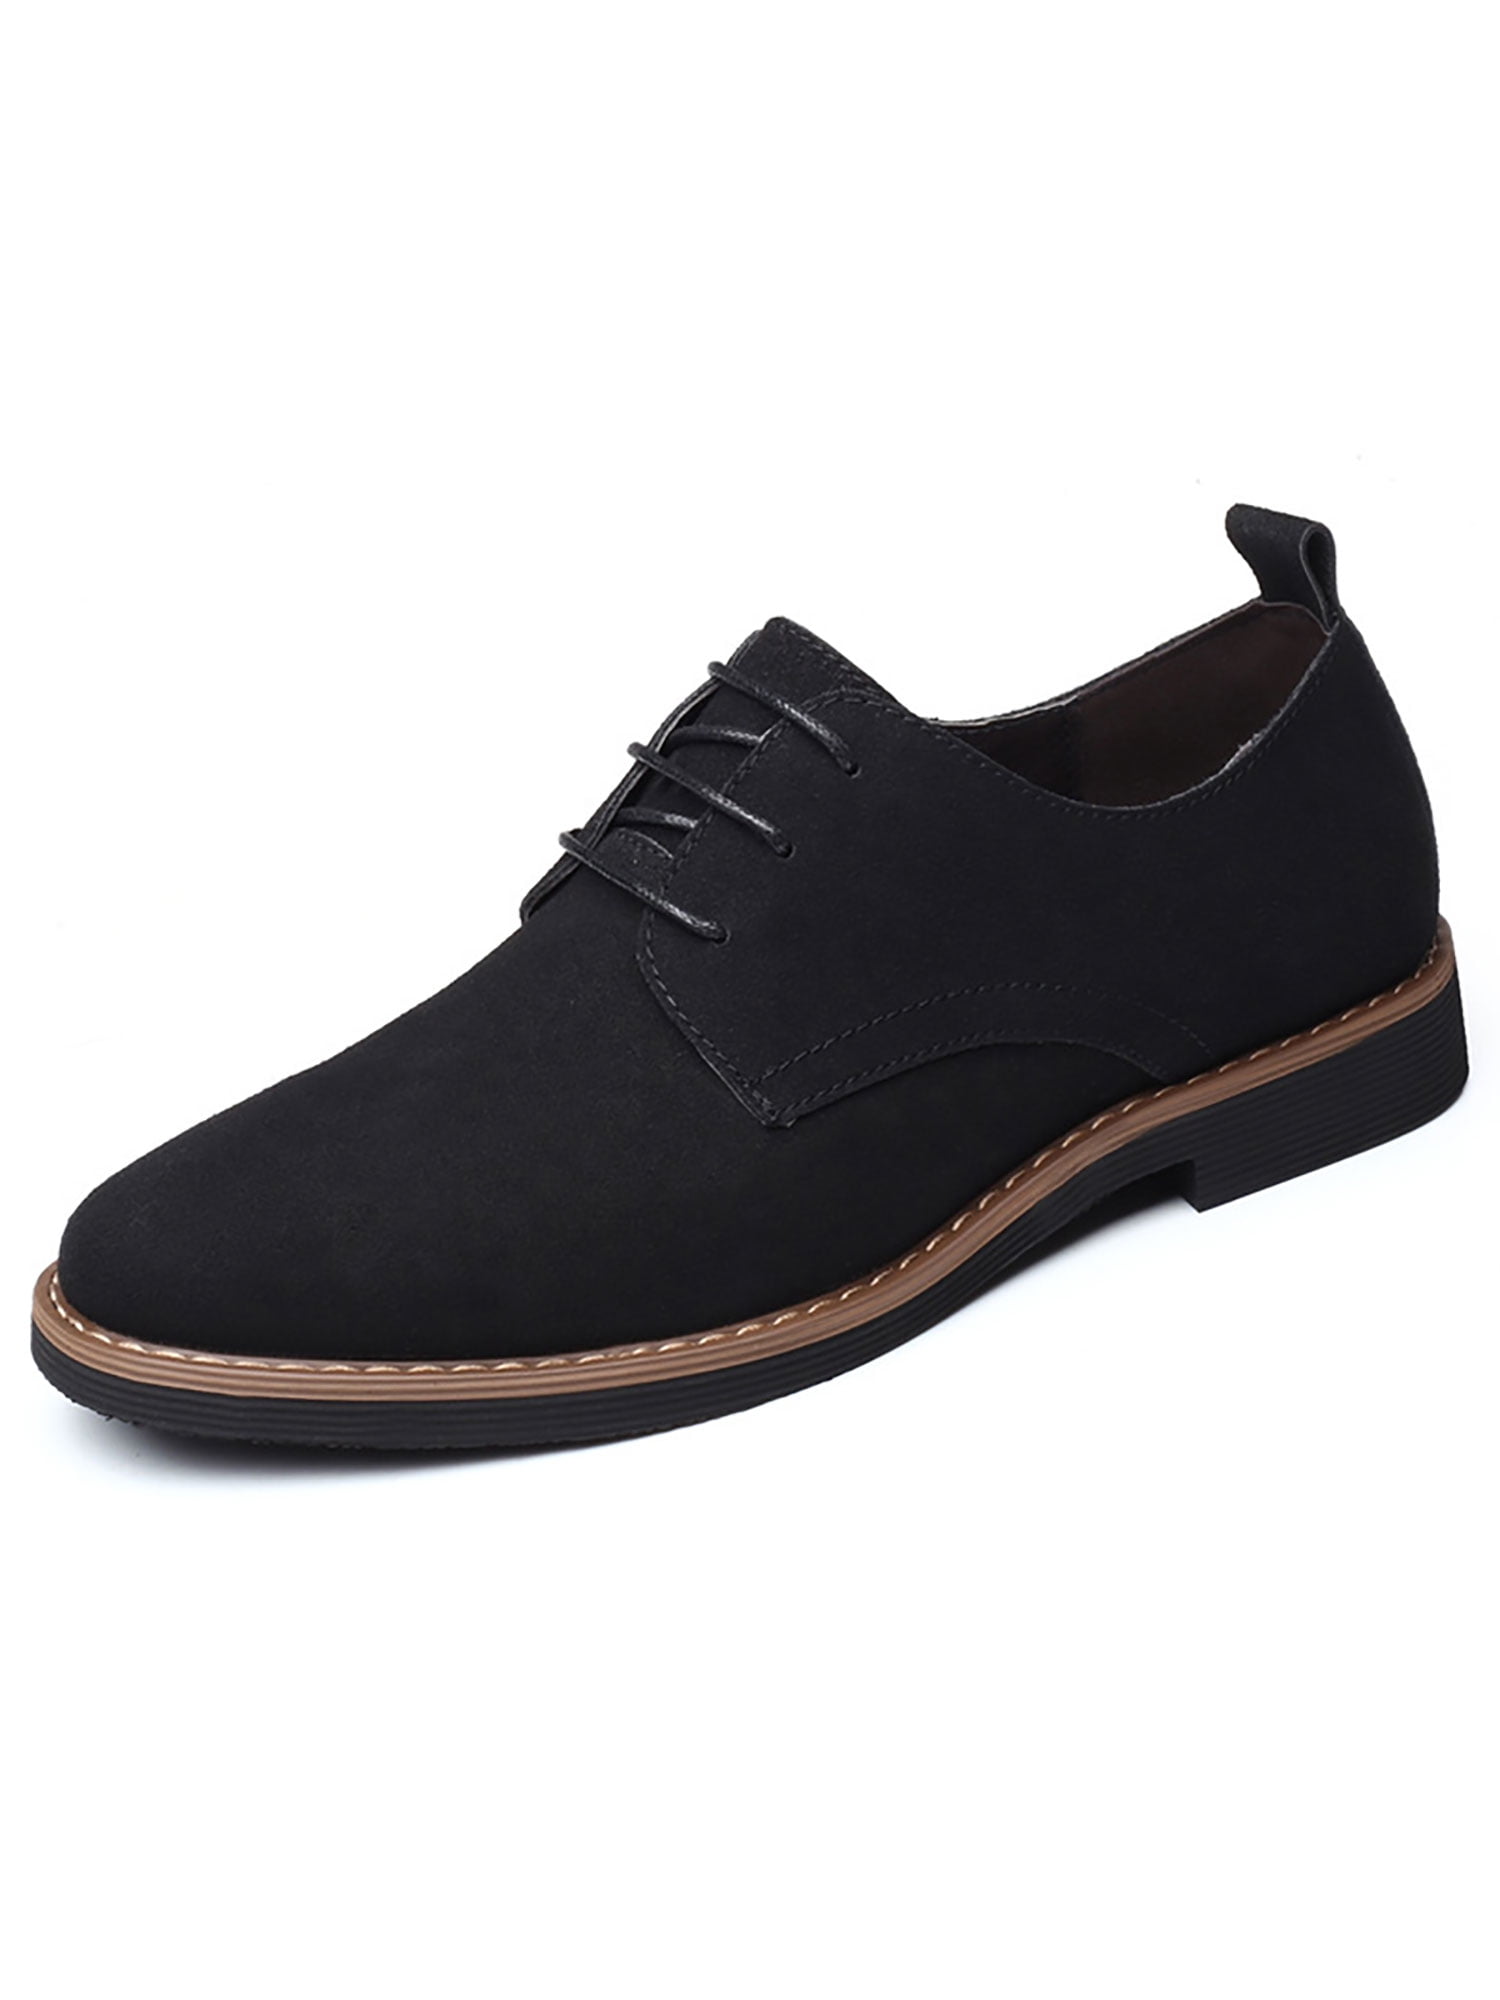 Color : Black, Size : 7 D M US Business Oxford Fashion Simple Comfortable Lace Up Shoes Mens Leather Dress Shoes Slip On Plain Toe Loafer 